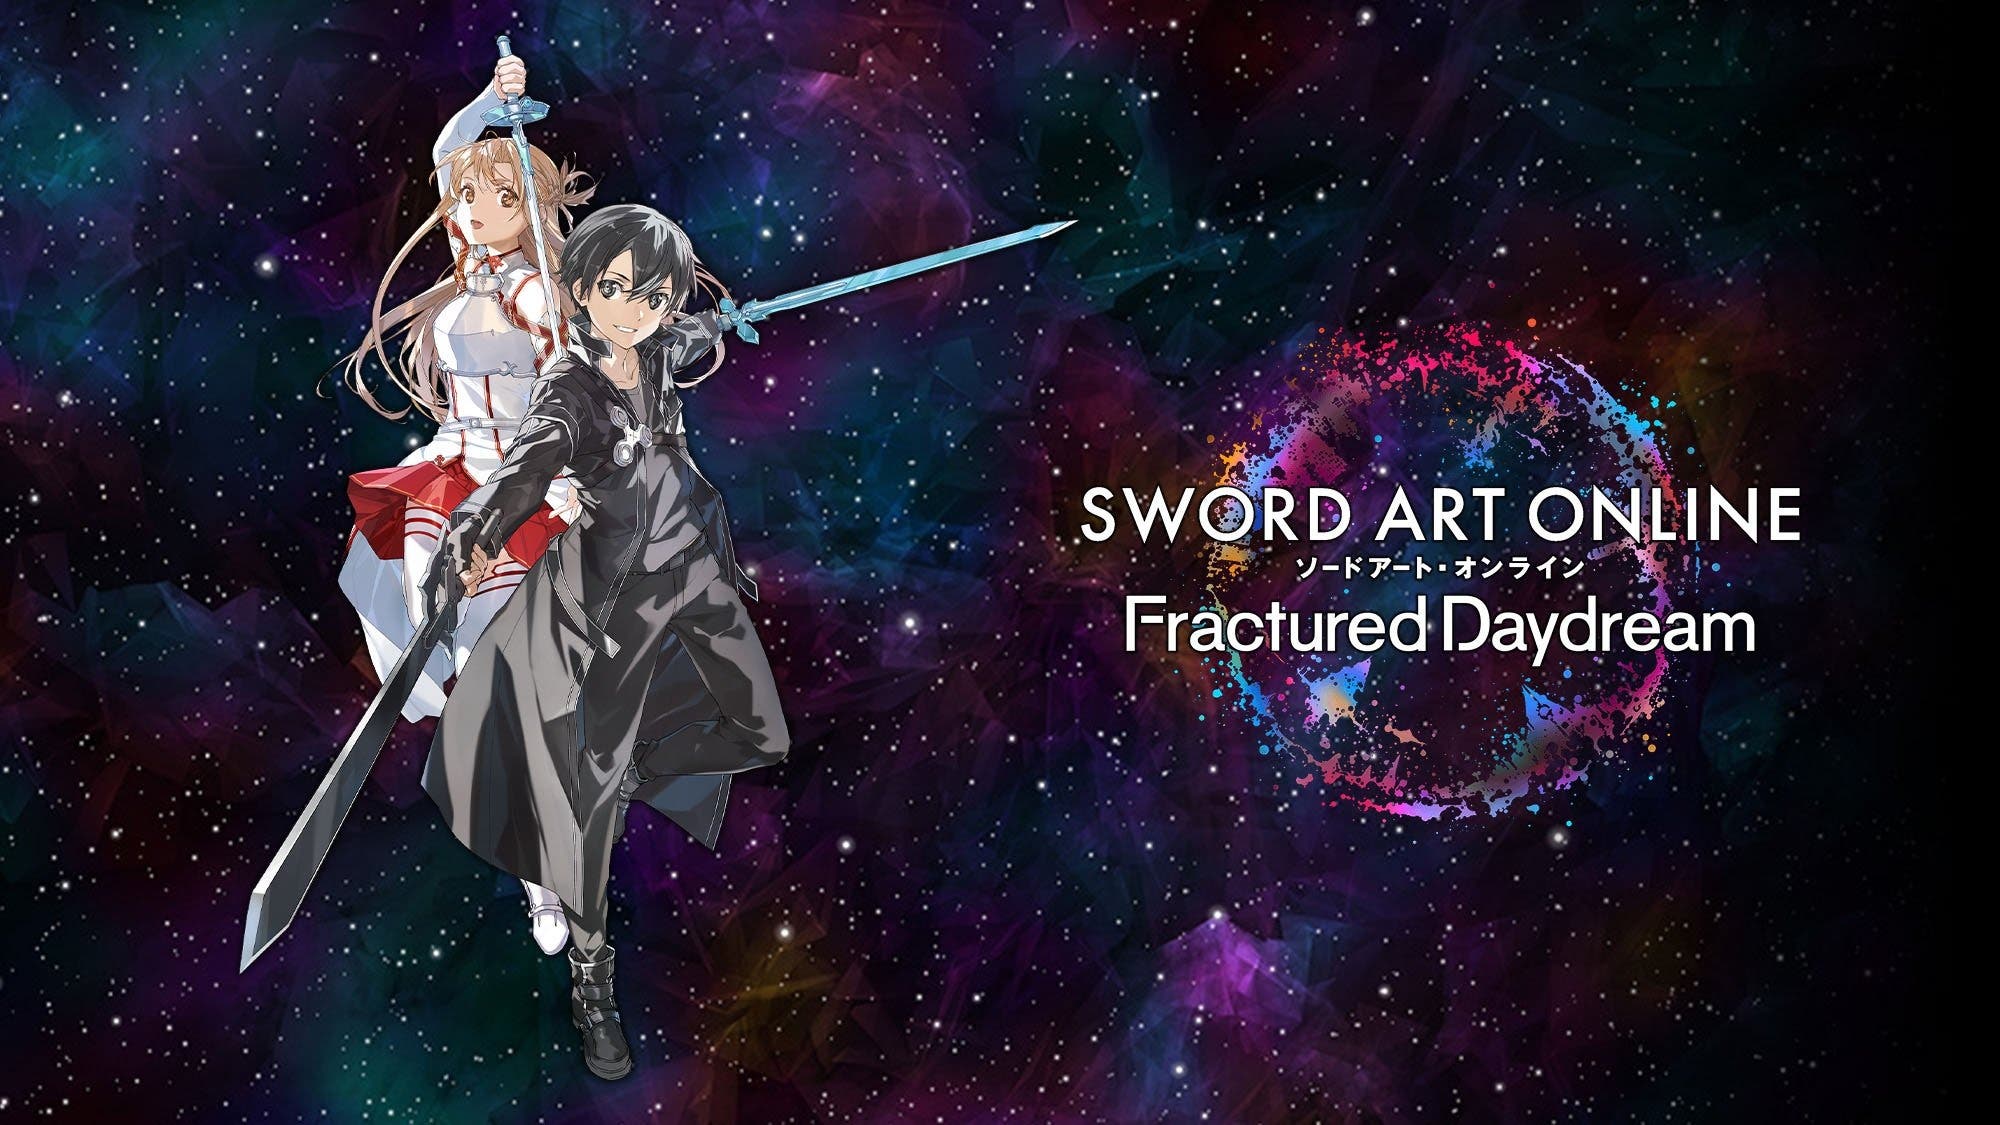 Sword Art Online vuelve a la carga con Fractured Daydream en Nintendo Switch